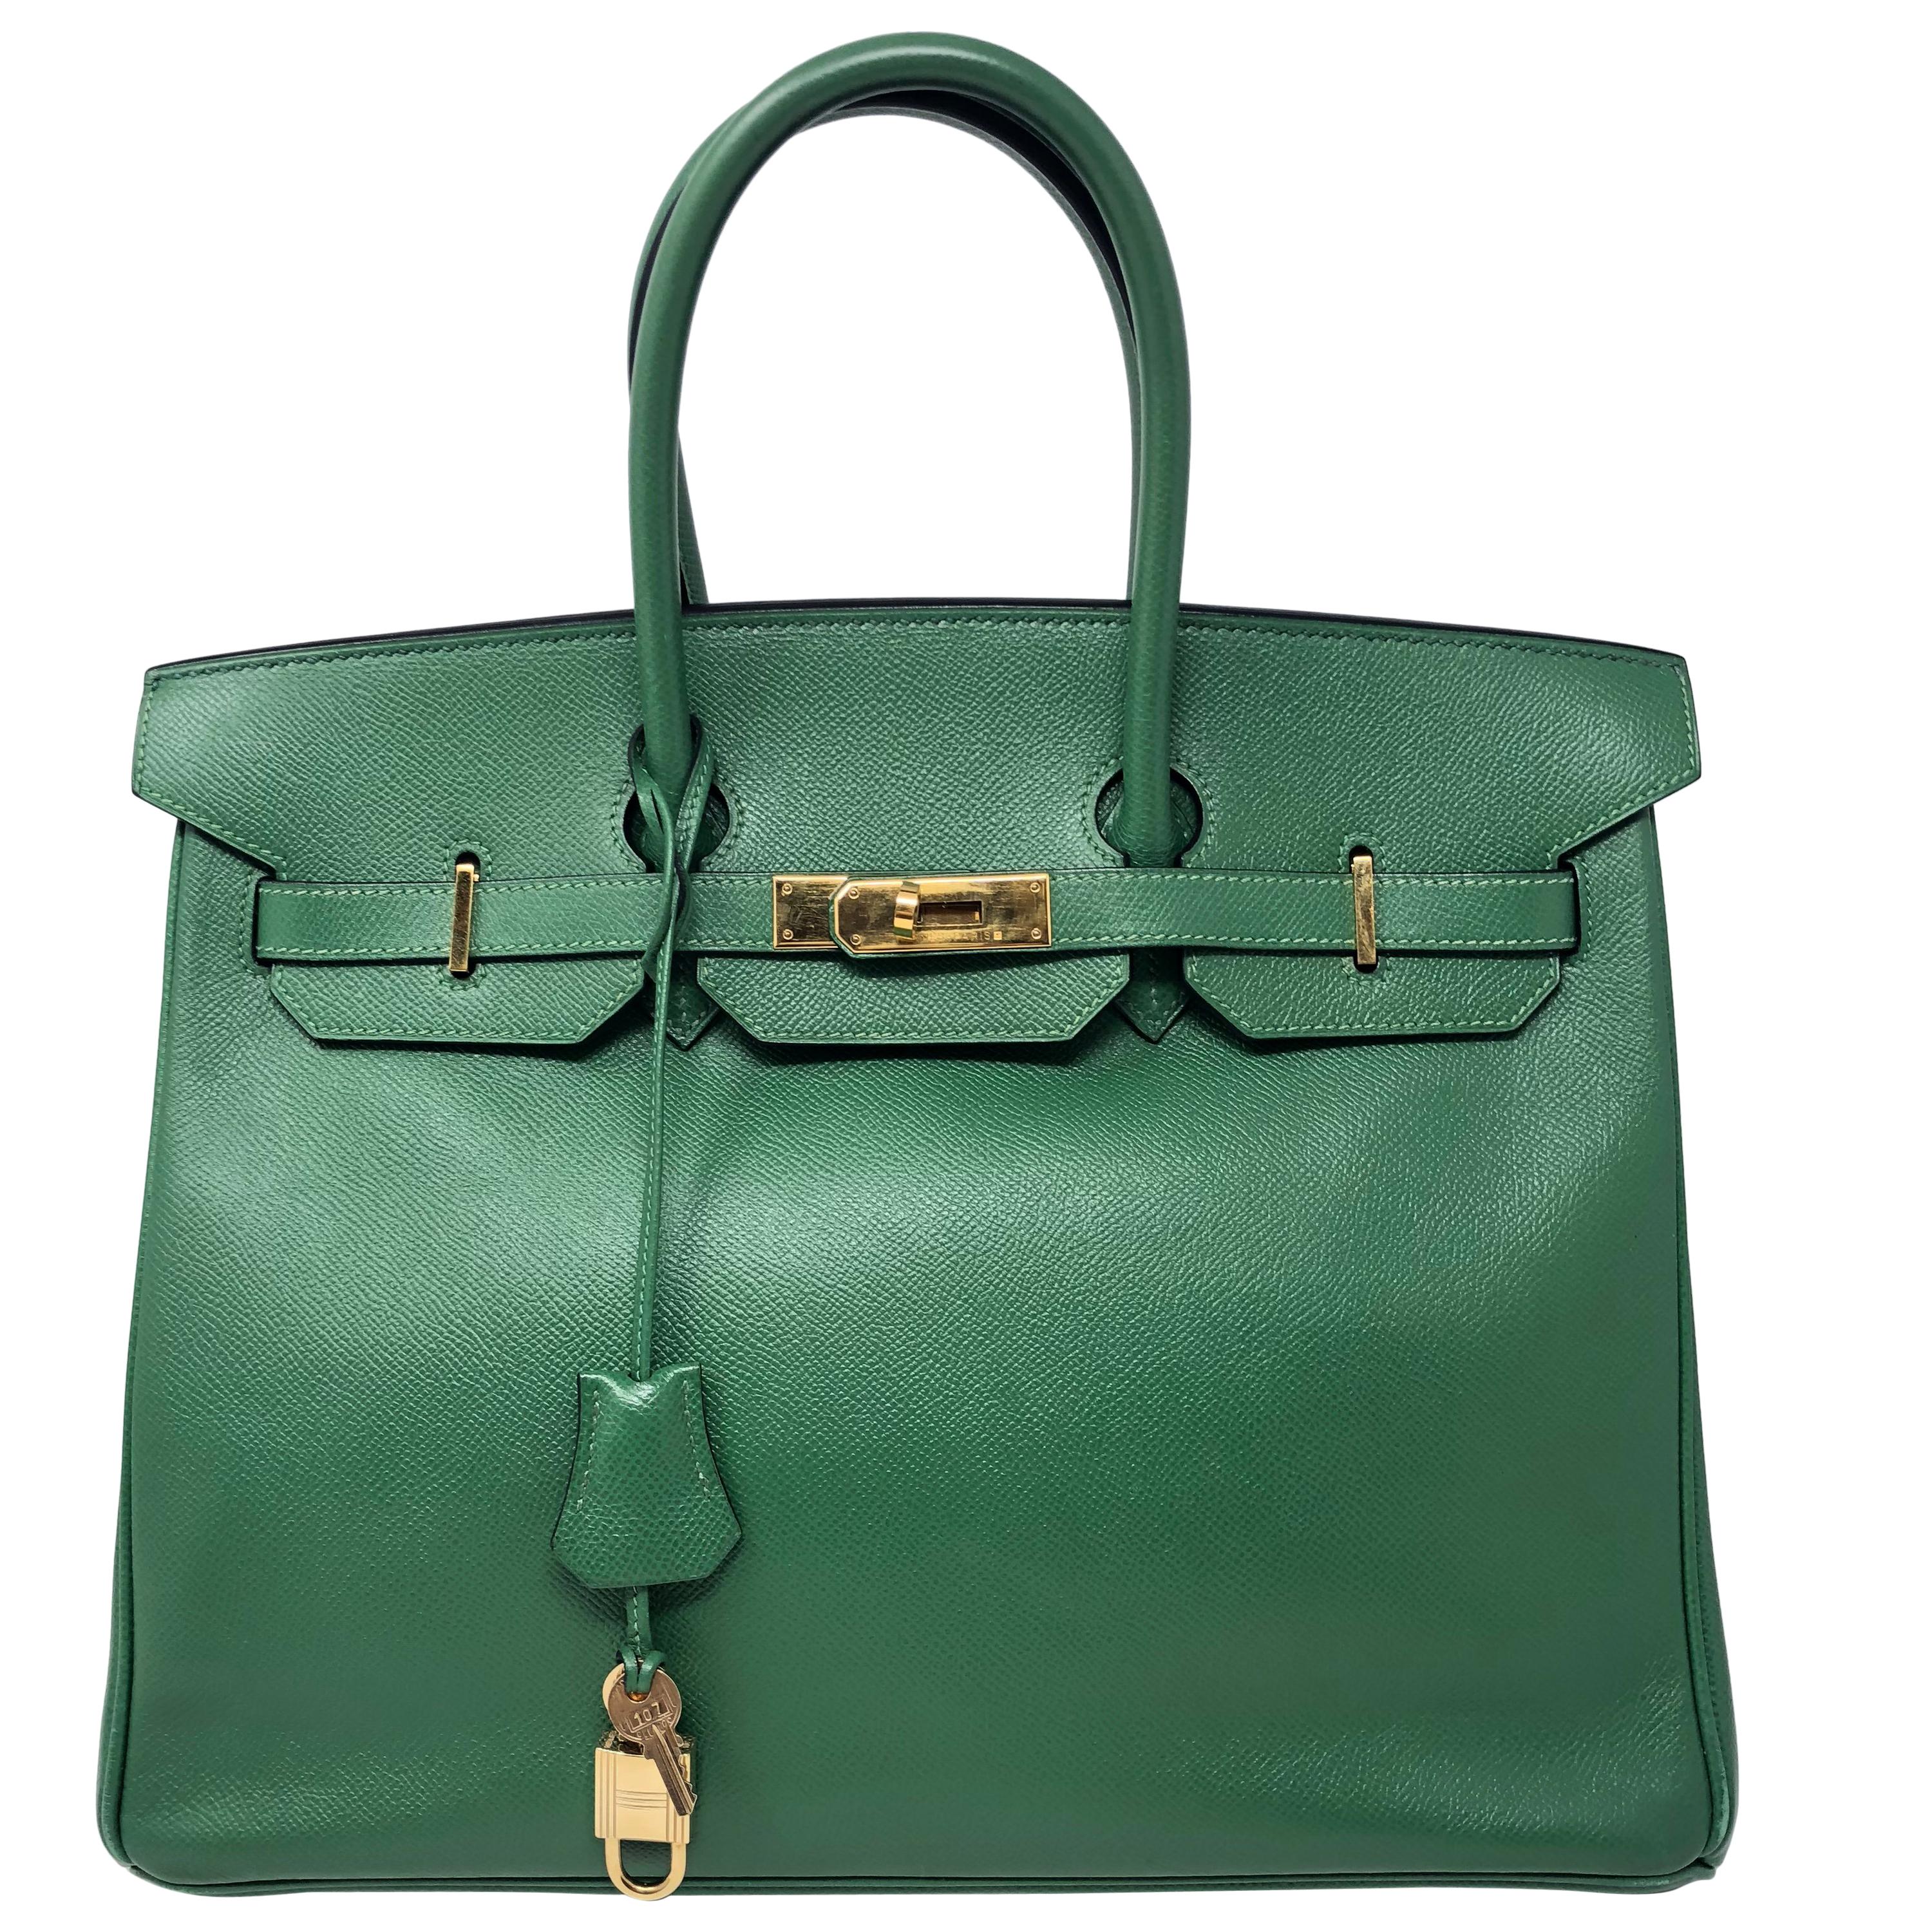 Hermes Emerald Green courchevel leather Gold hardware Birkin 35 Bag